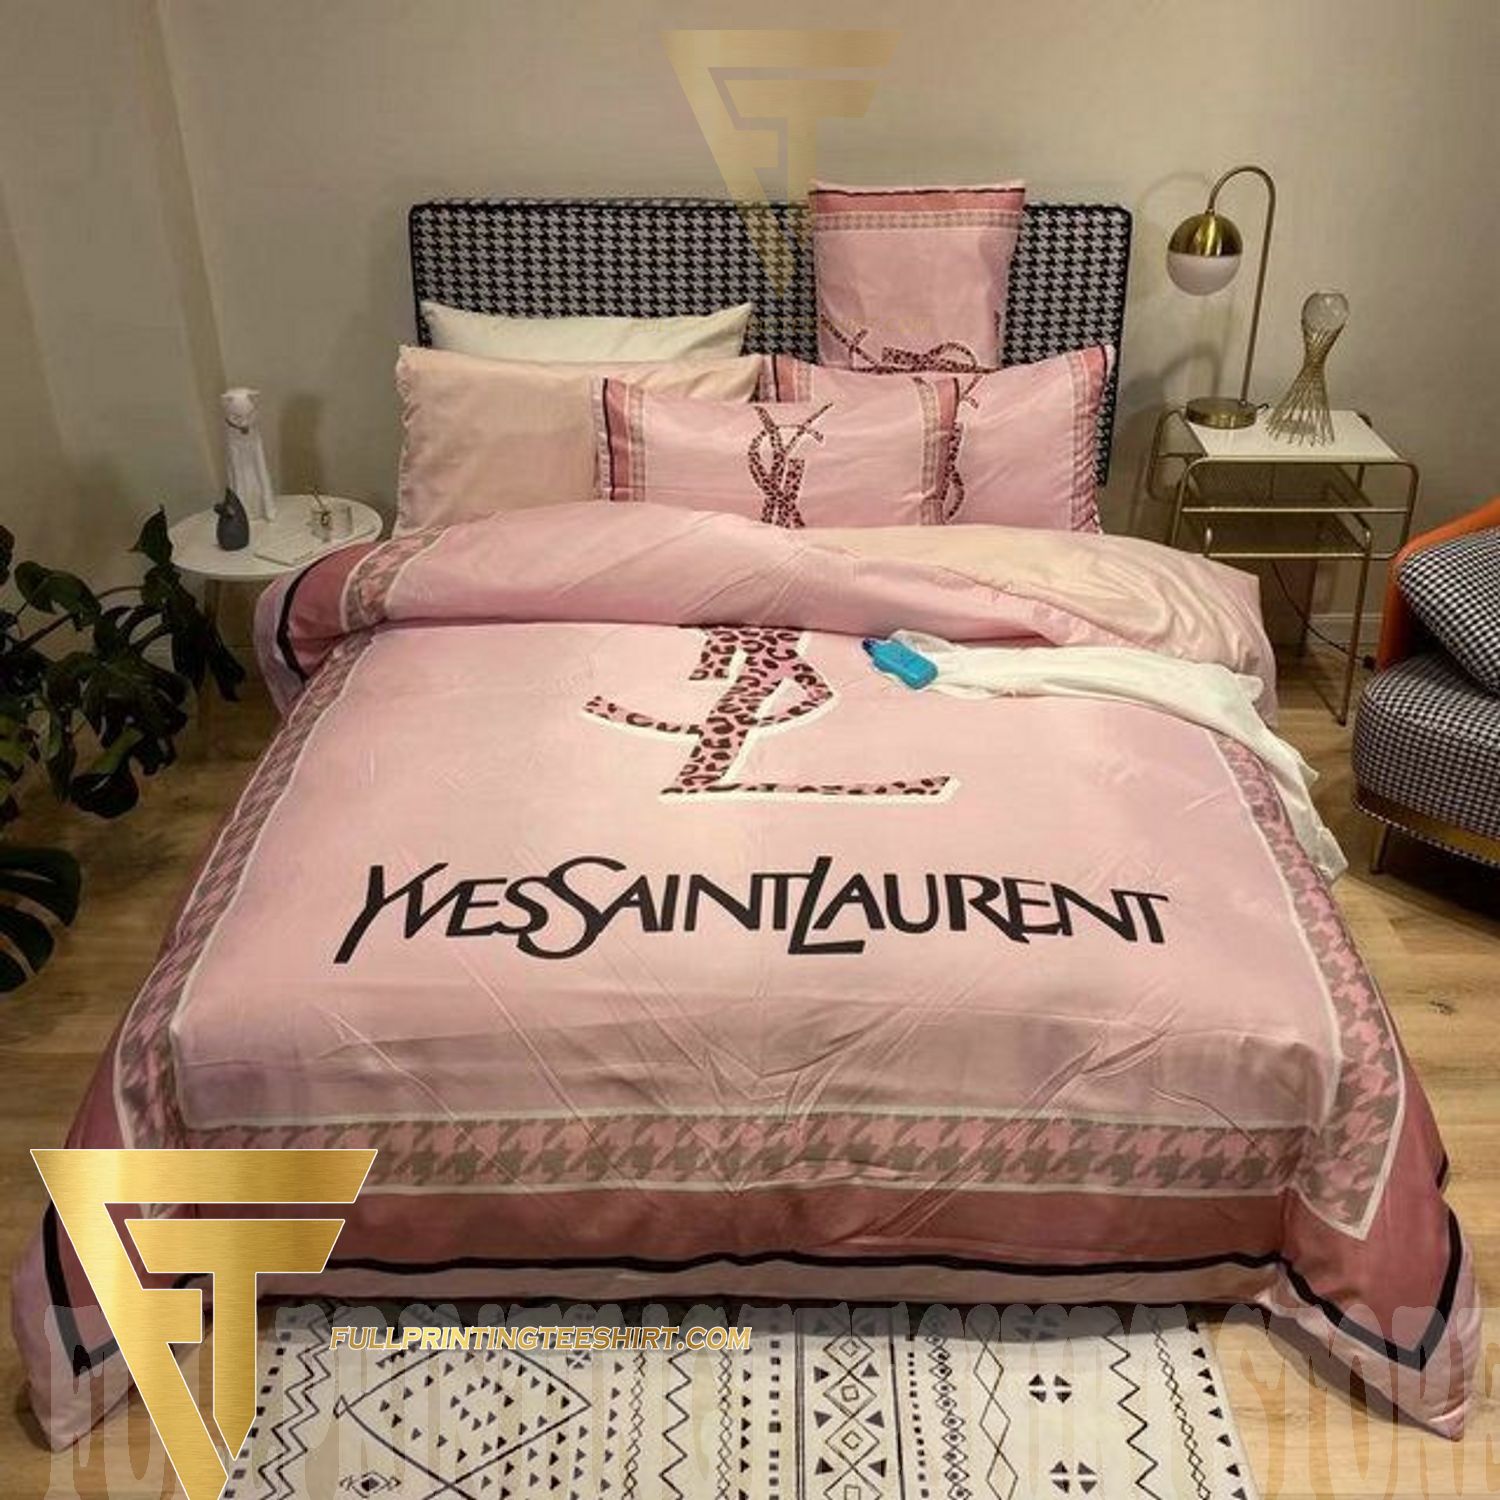 Top-selling item] Ysl Yves Saint Laurent Luxury Brand Type 03 Home ...